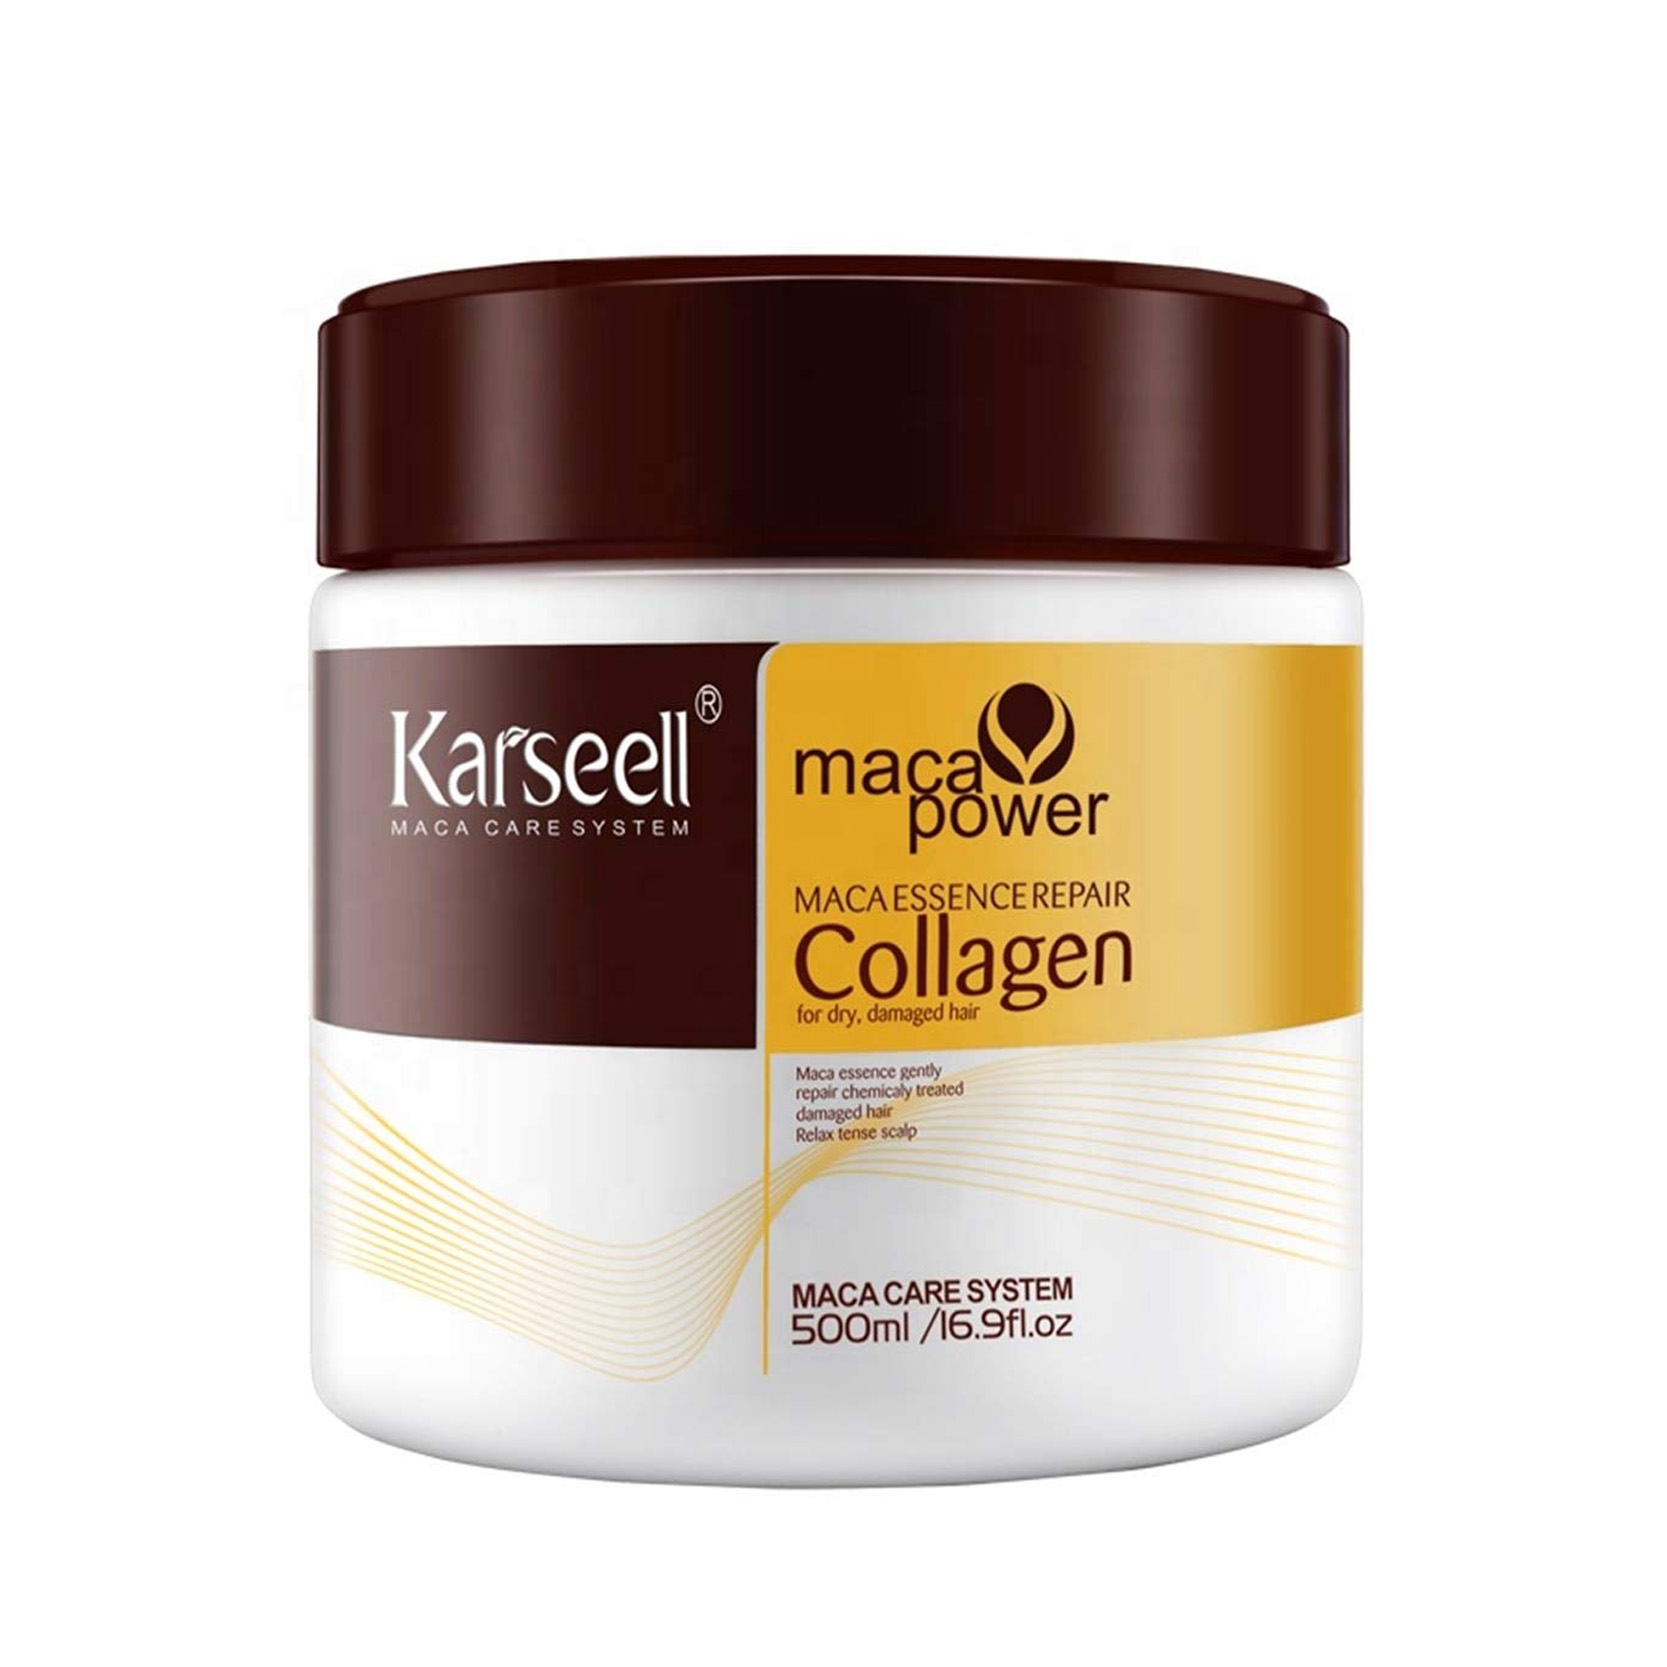 Karseell маска отзывы. Collagen maca Power для волос Karseell. Maca Power Collagen для волос маска. Karseell Collagen маска для волос. Maca Power Collagen Karseell маска.